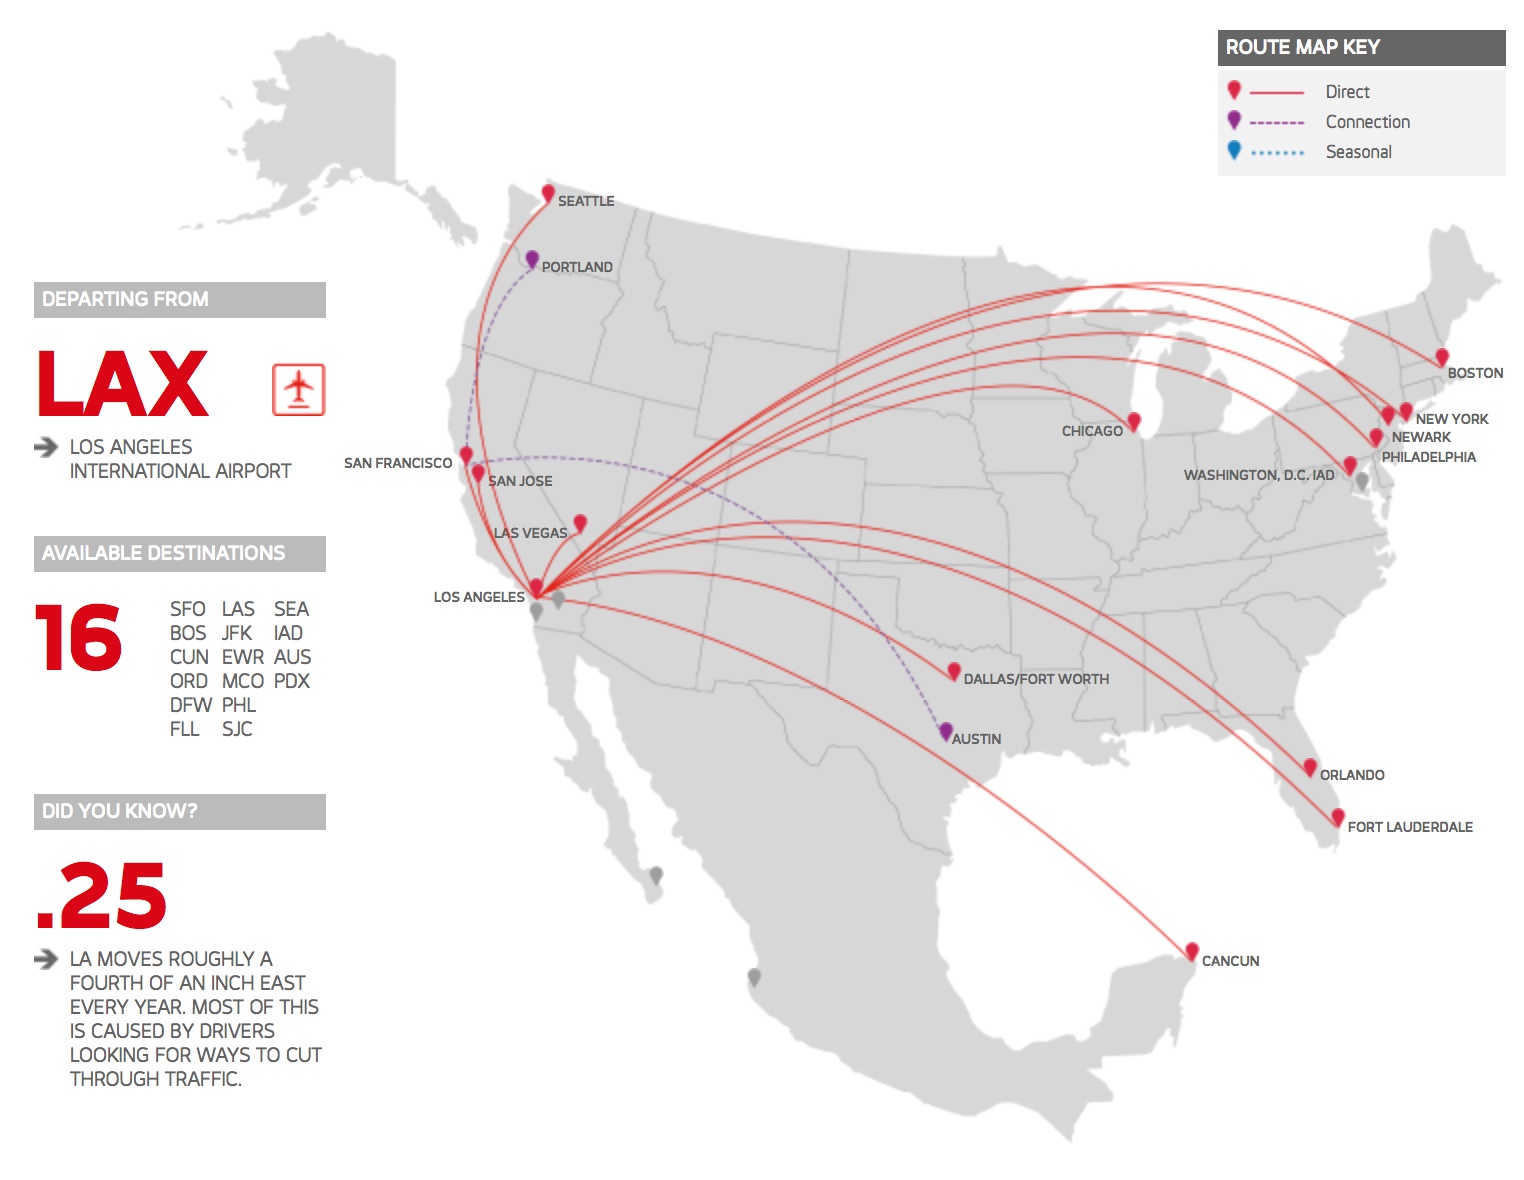 Virgin America 2.2014 LAX Route Map1524 x 1180